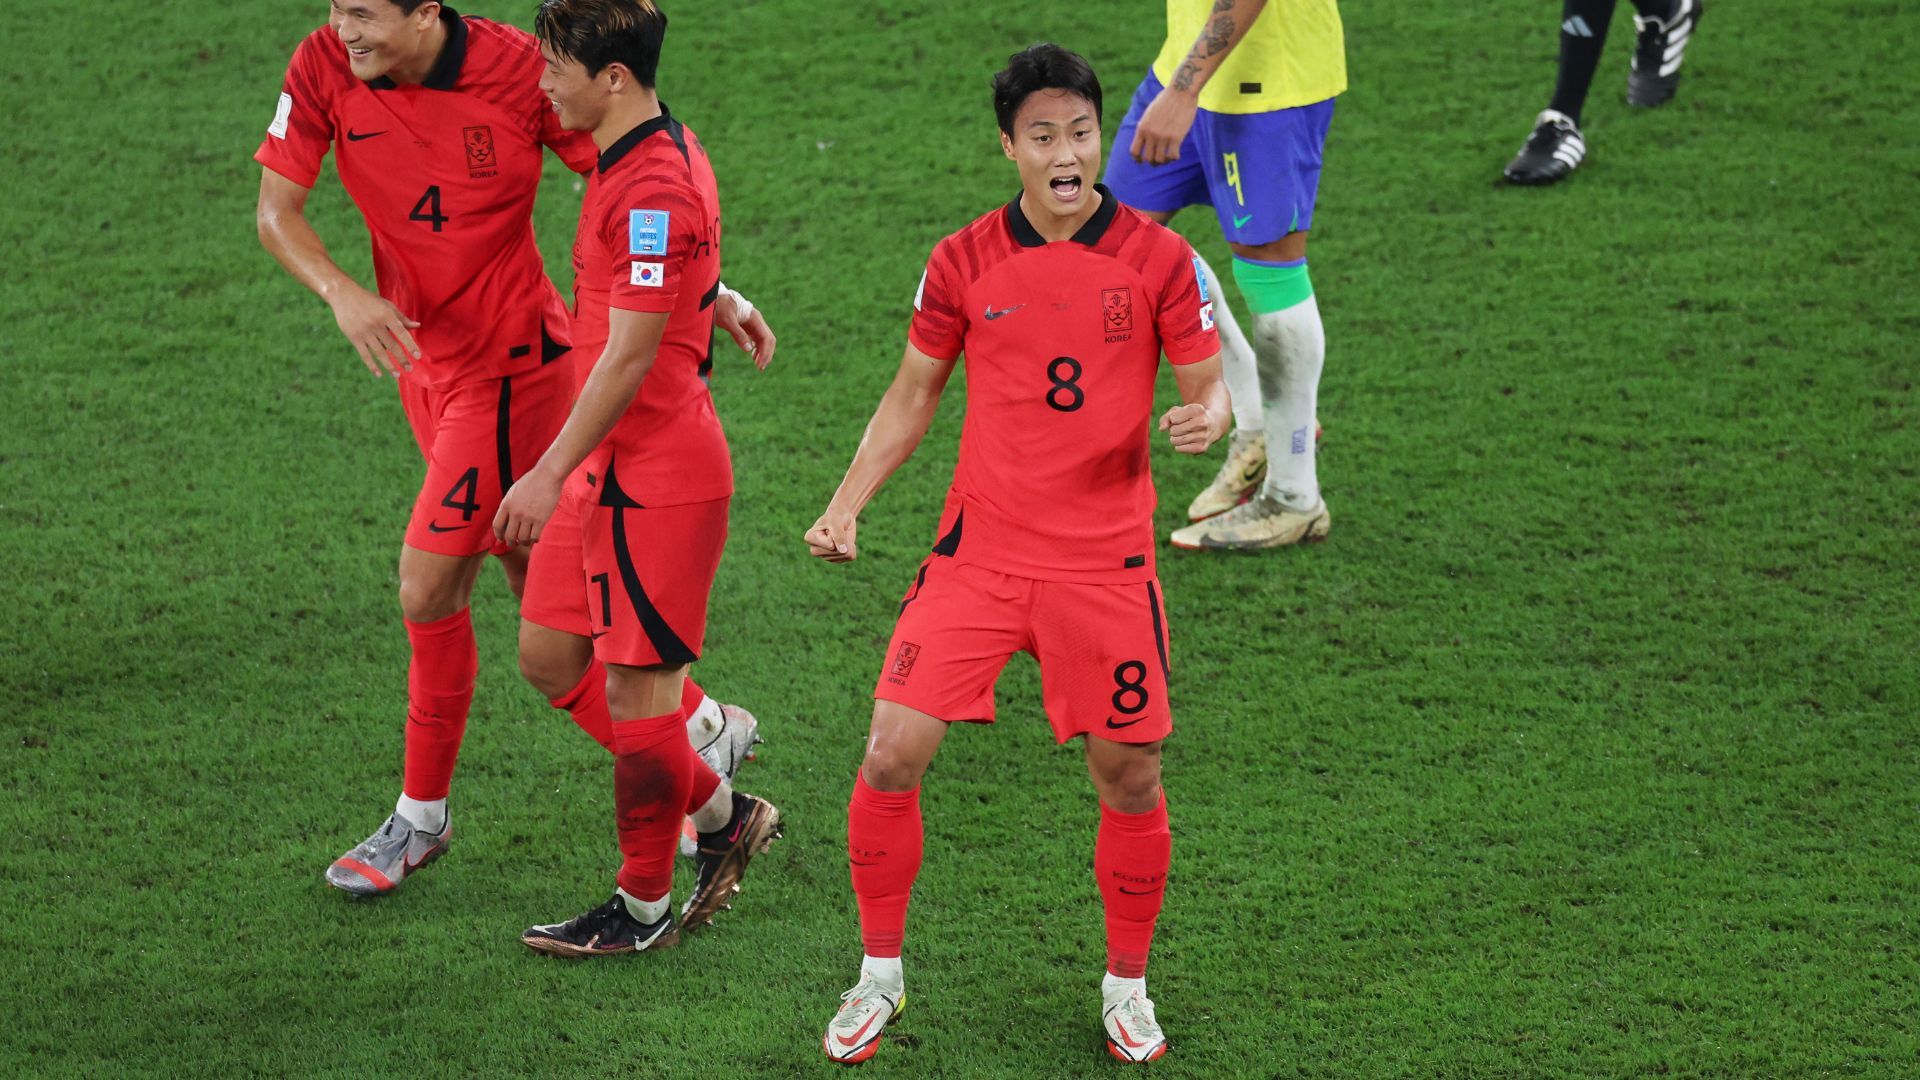 Paik Paik Seung-ho playing for South Korea